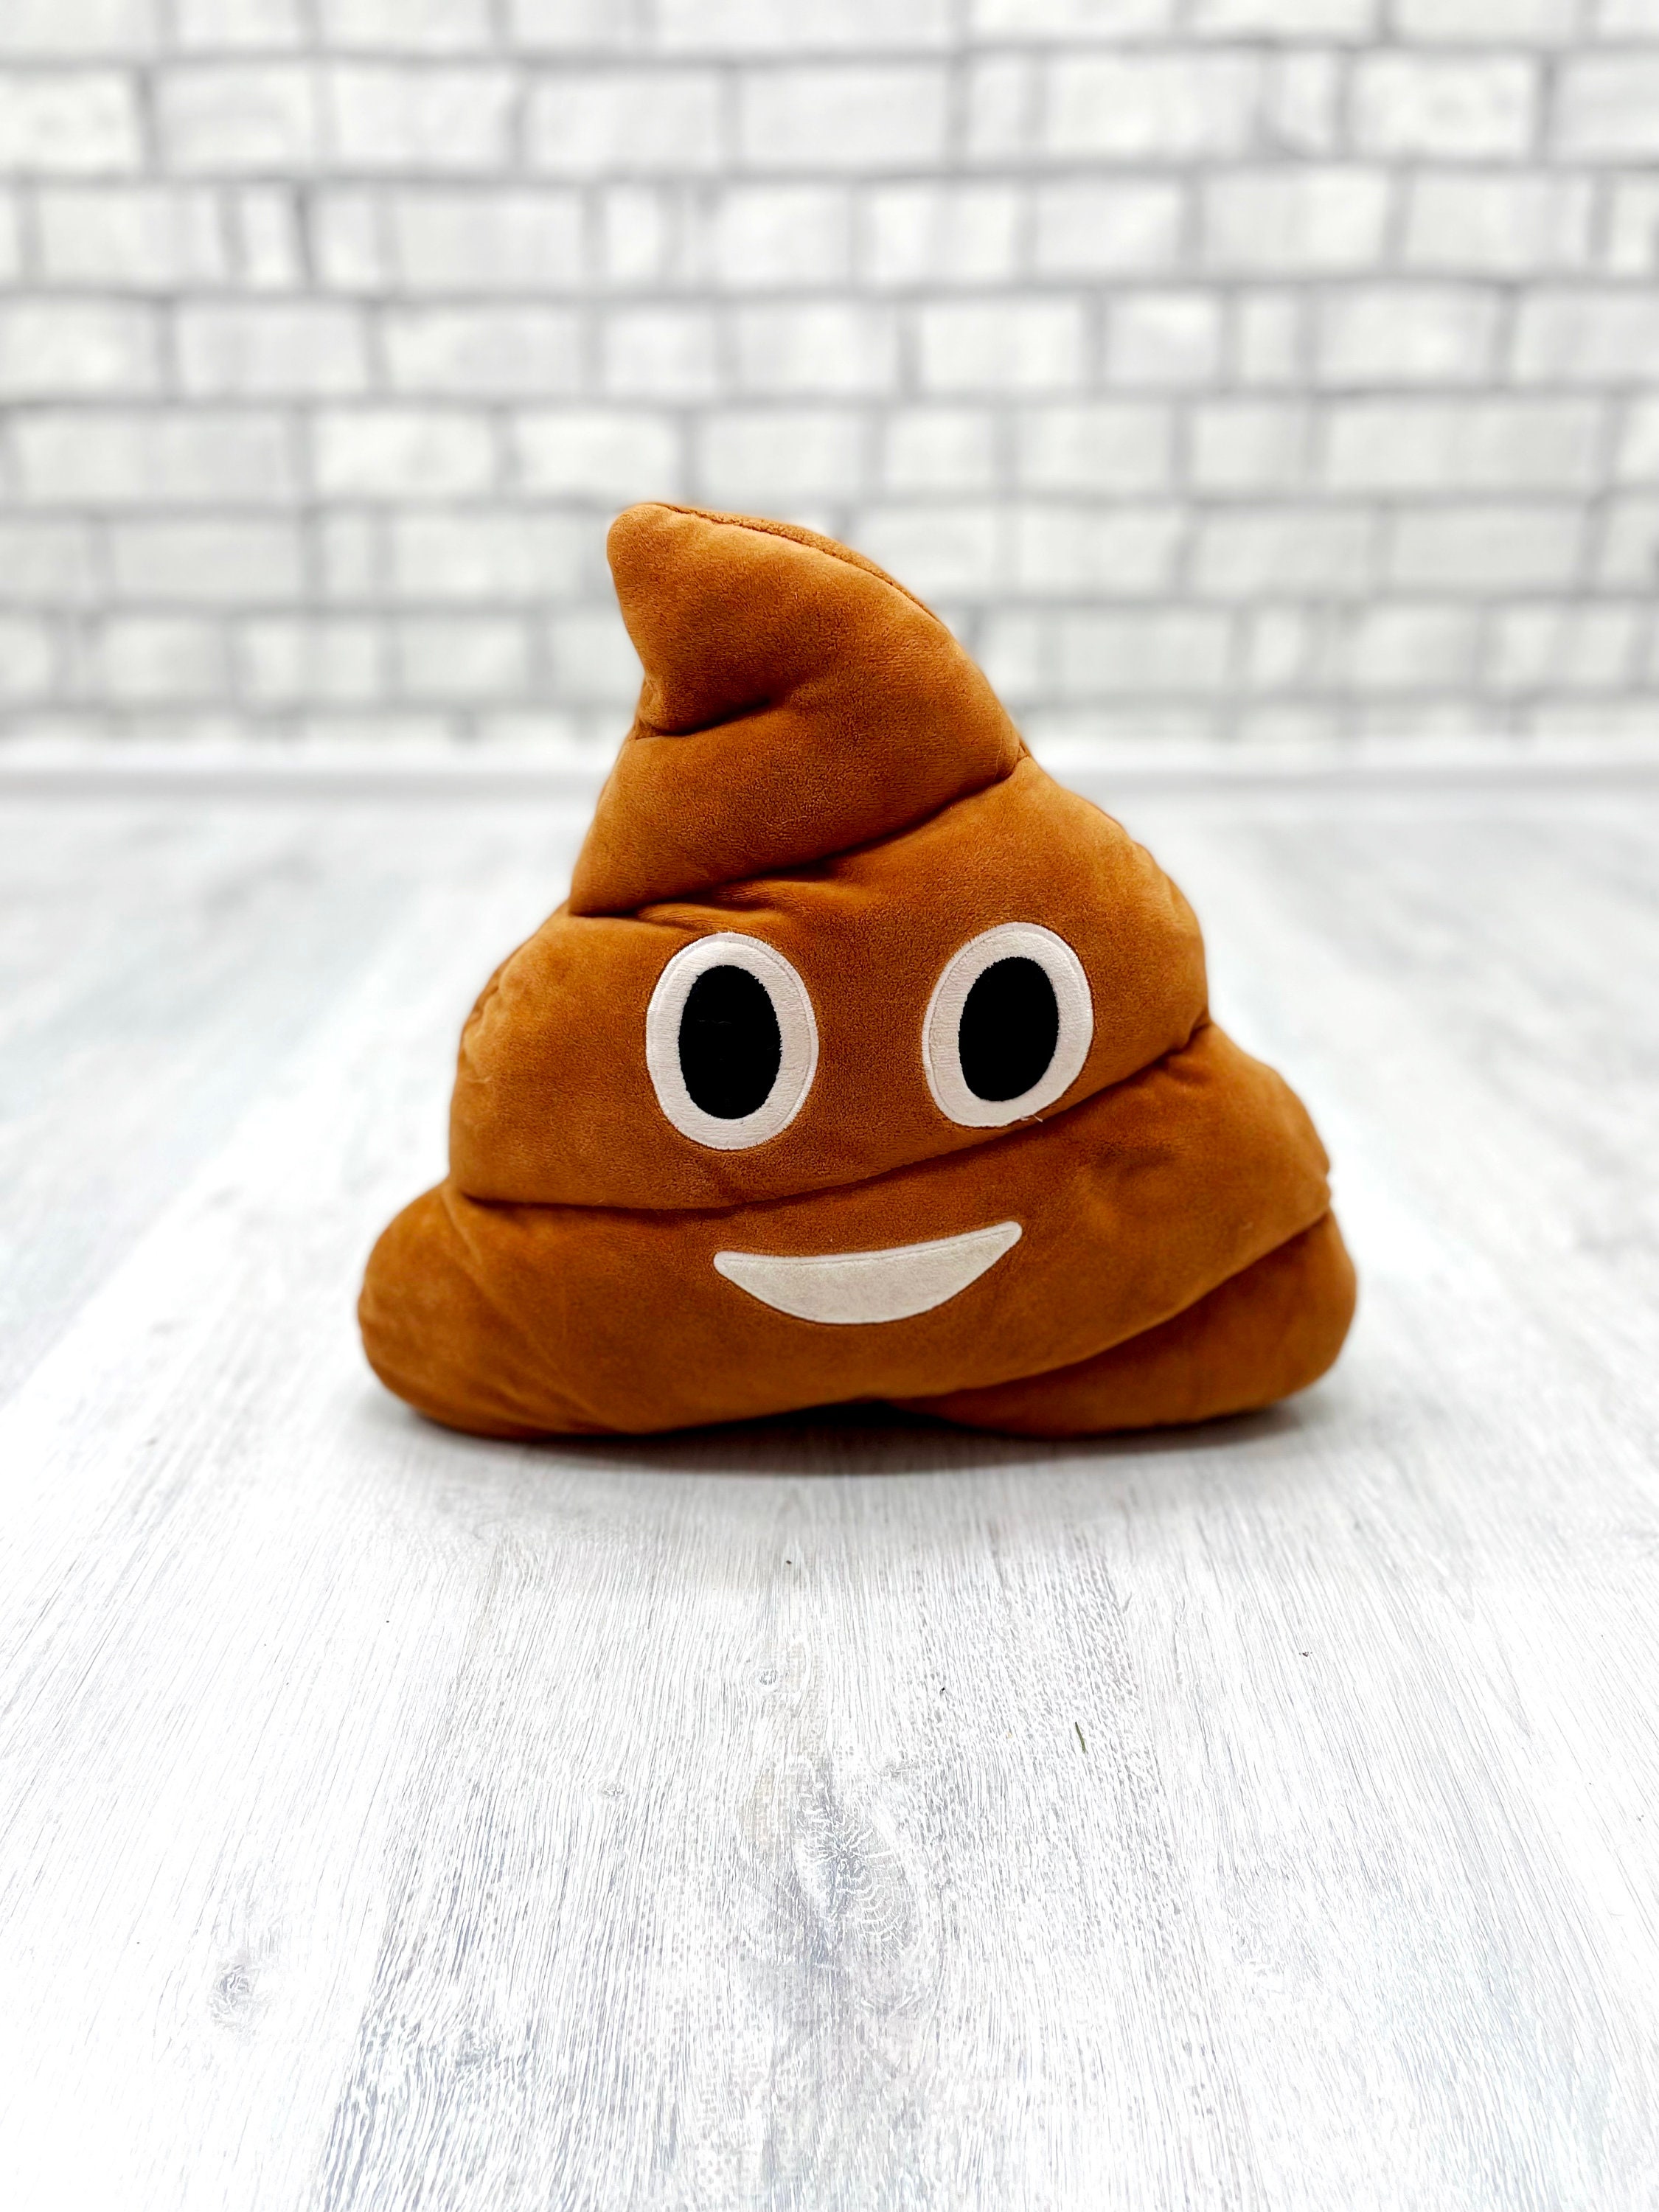 Poop plush emoji, poo toy gag gift, prank gift poo figurine, - Inspire  Uplift